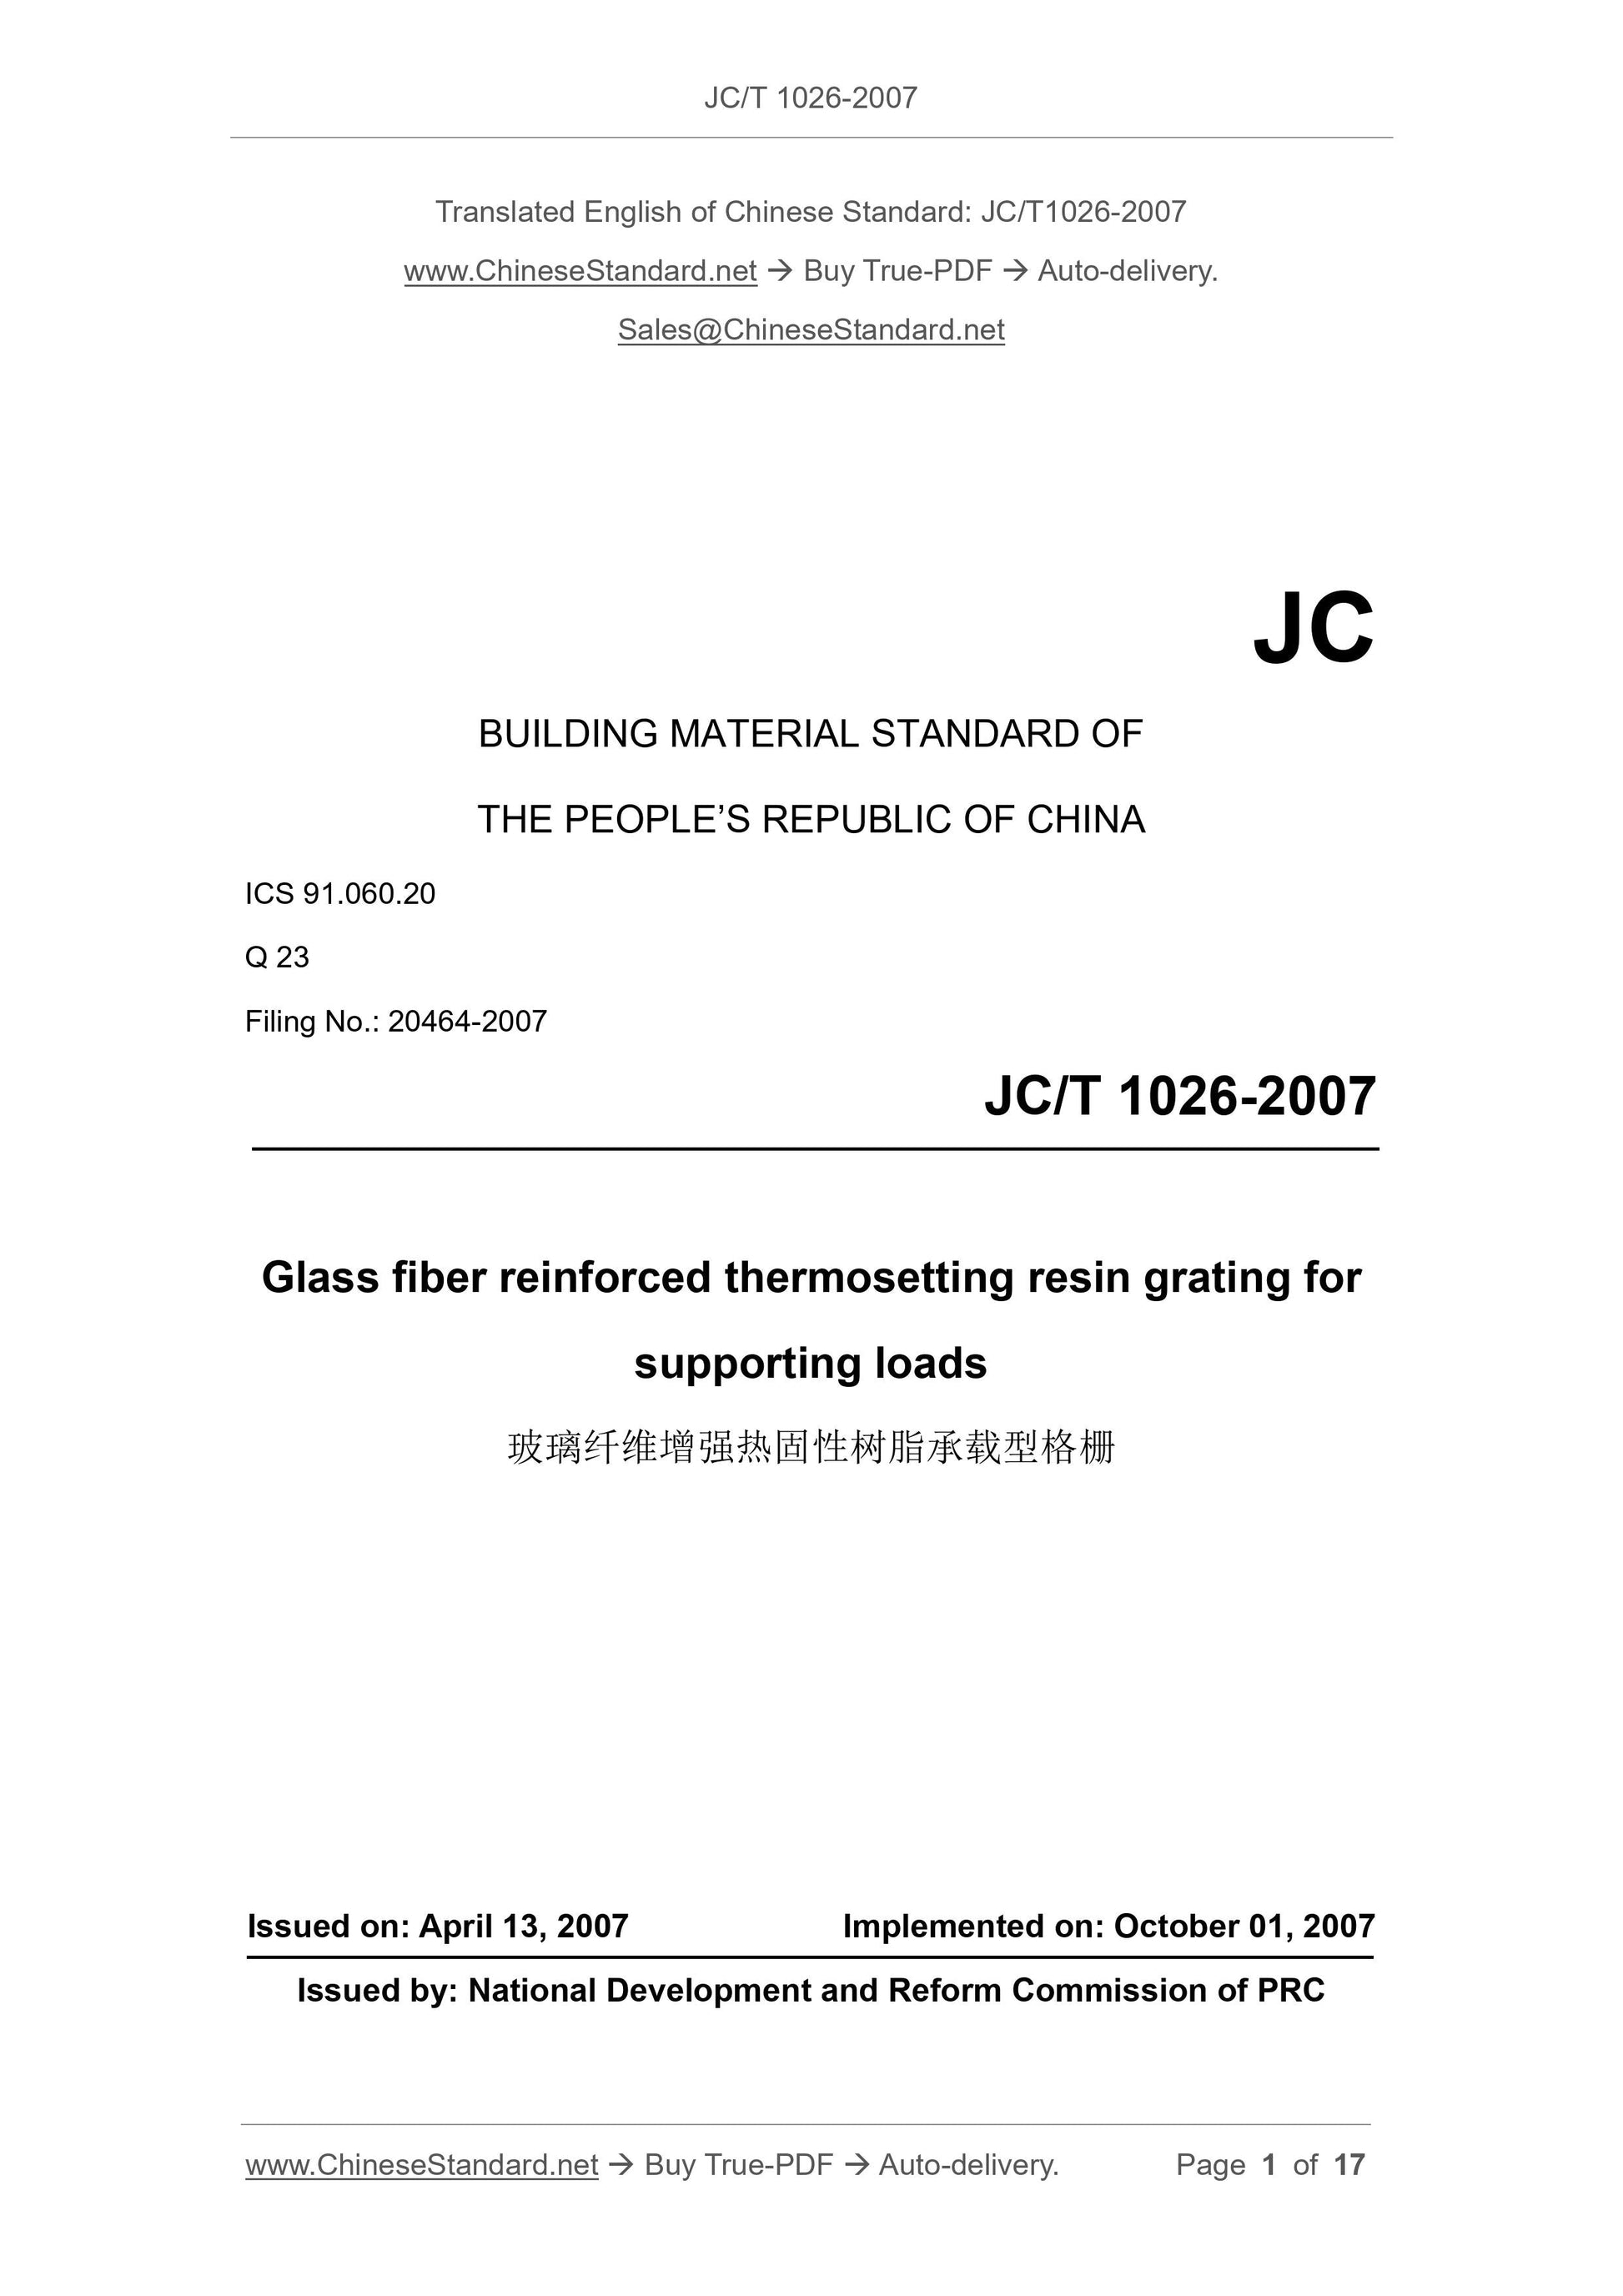 JC/T 1026-2007 Page 1